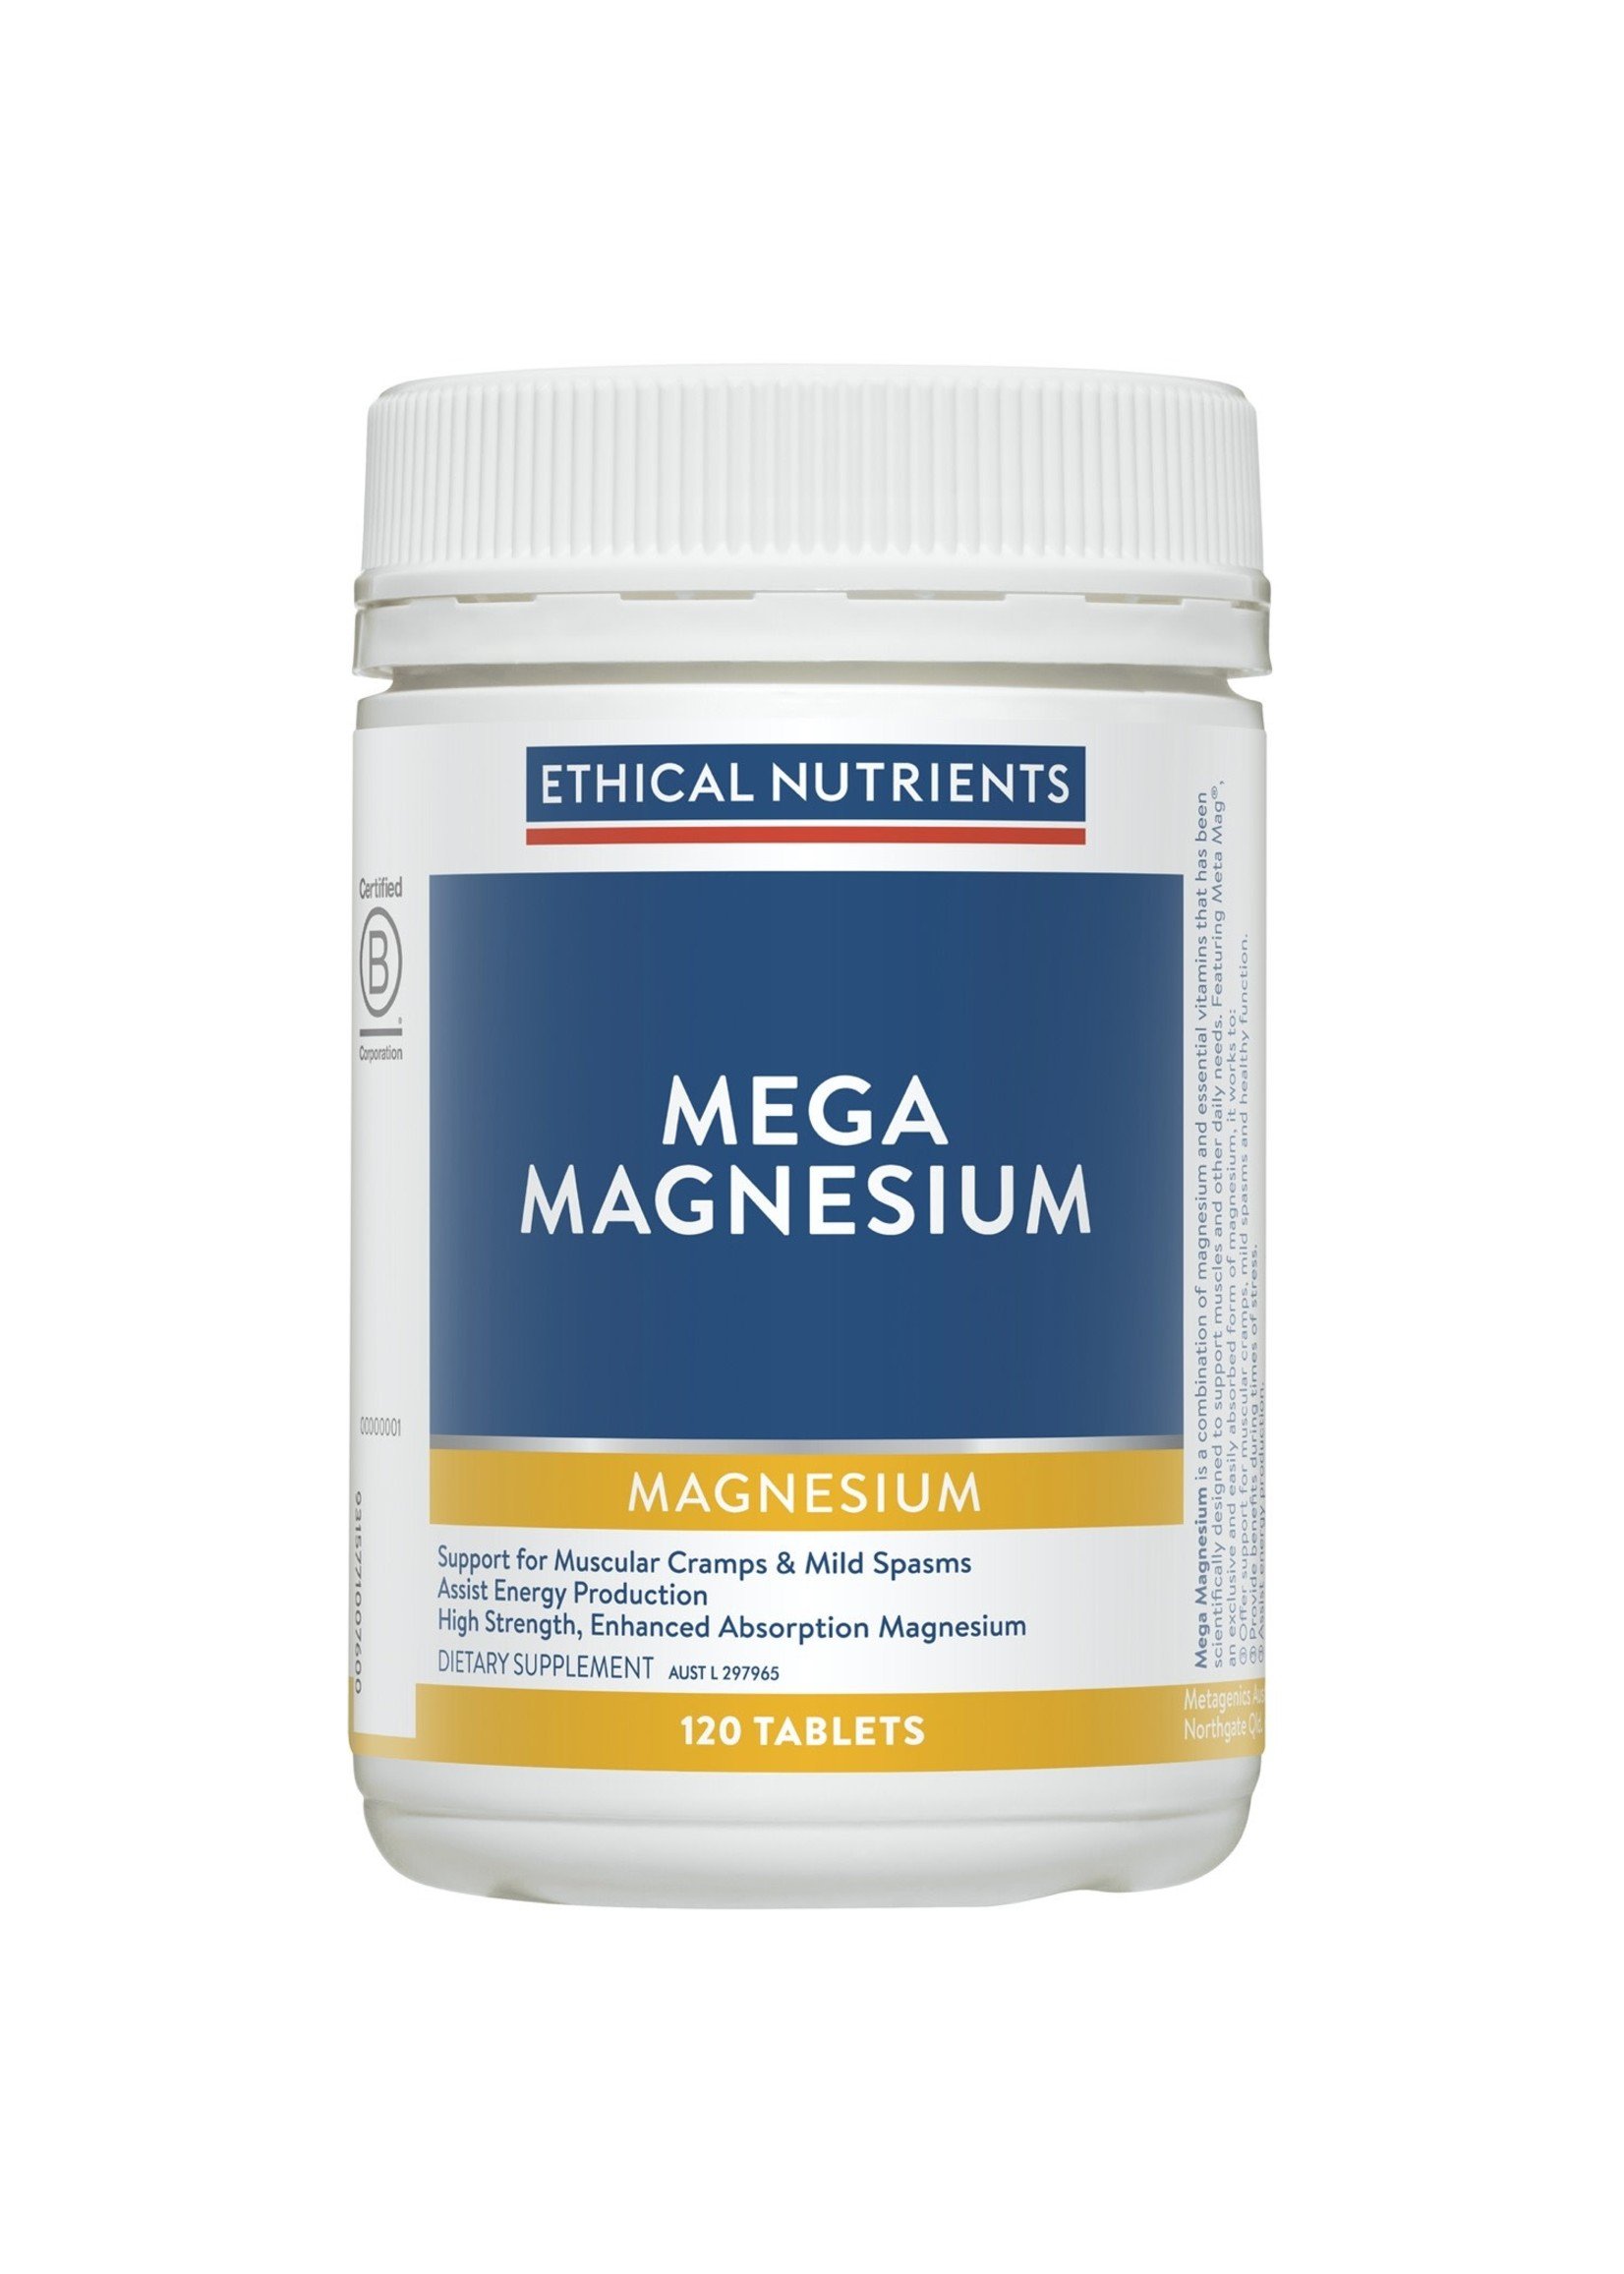 Ehtical Nutrients Ethical Nutrients Mega Magnesium  megazorb 120 tabs